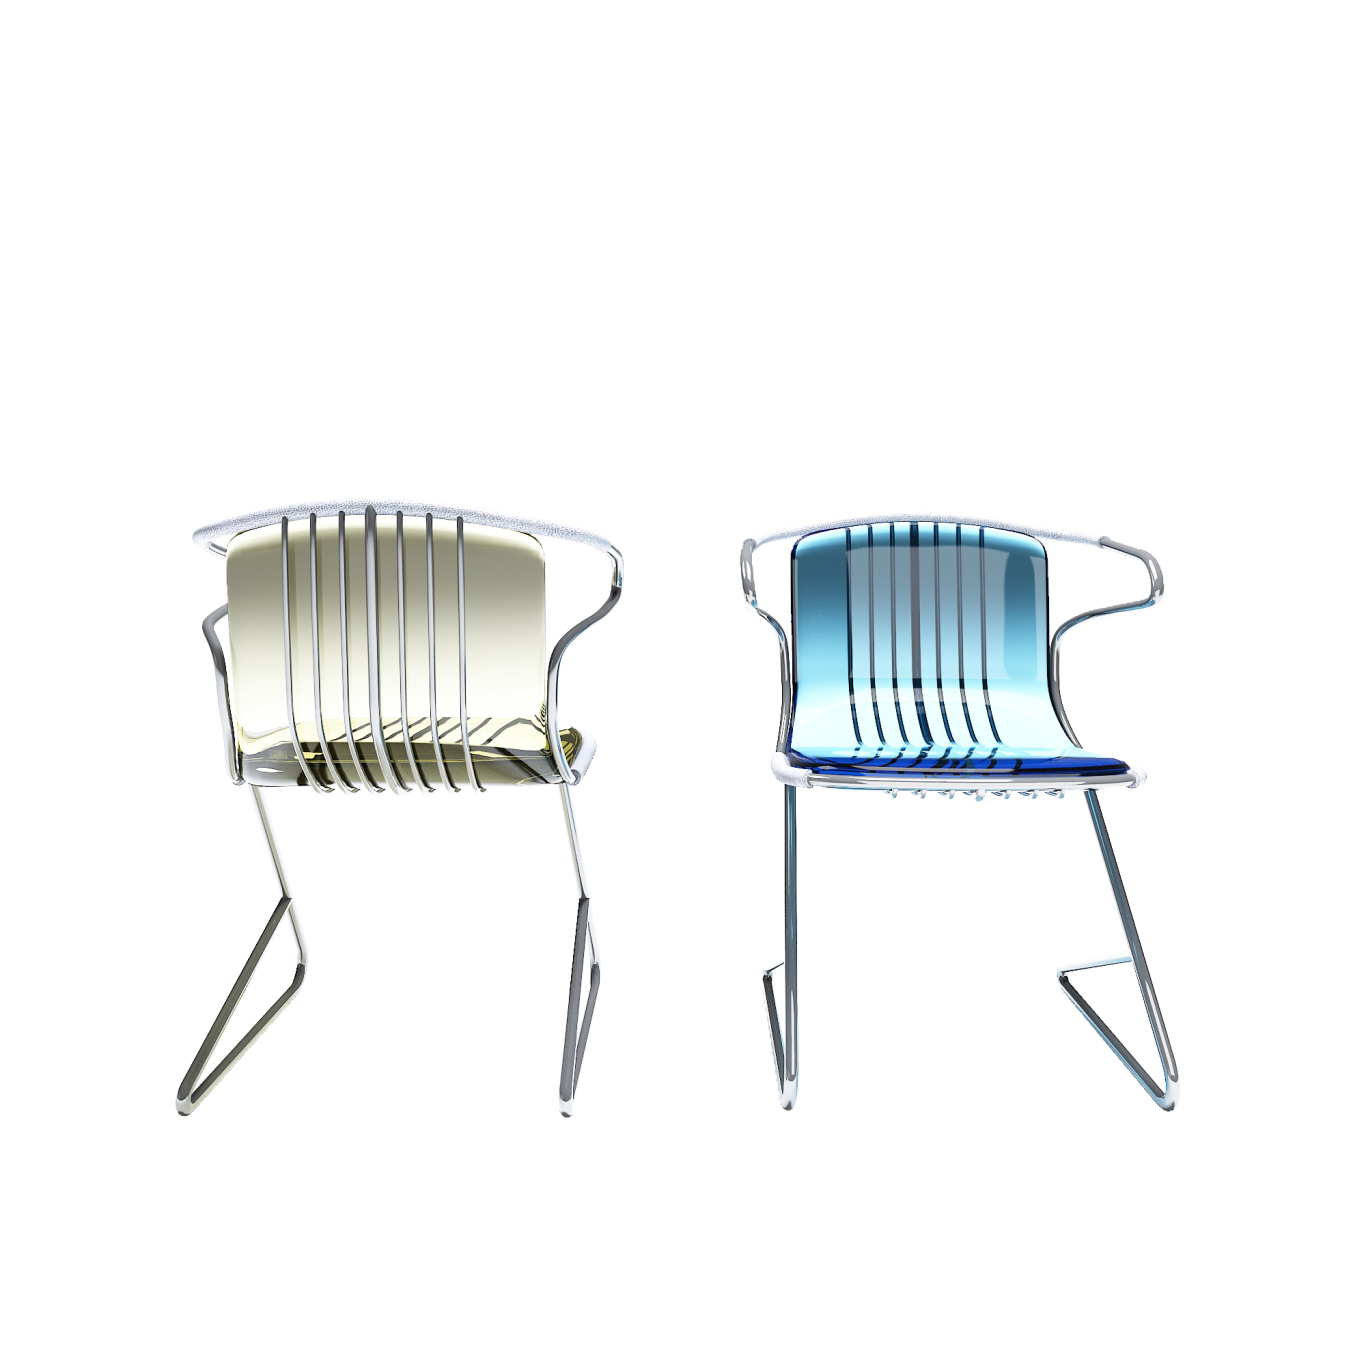 chair-椅子单体设计图0